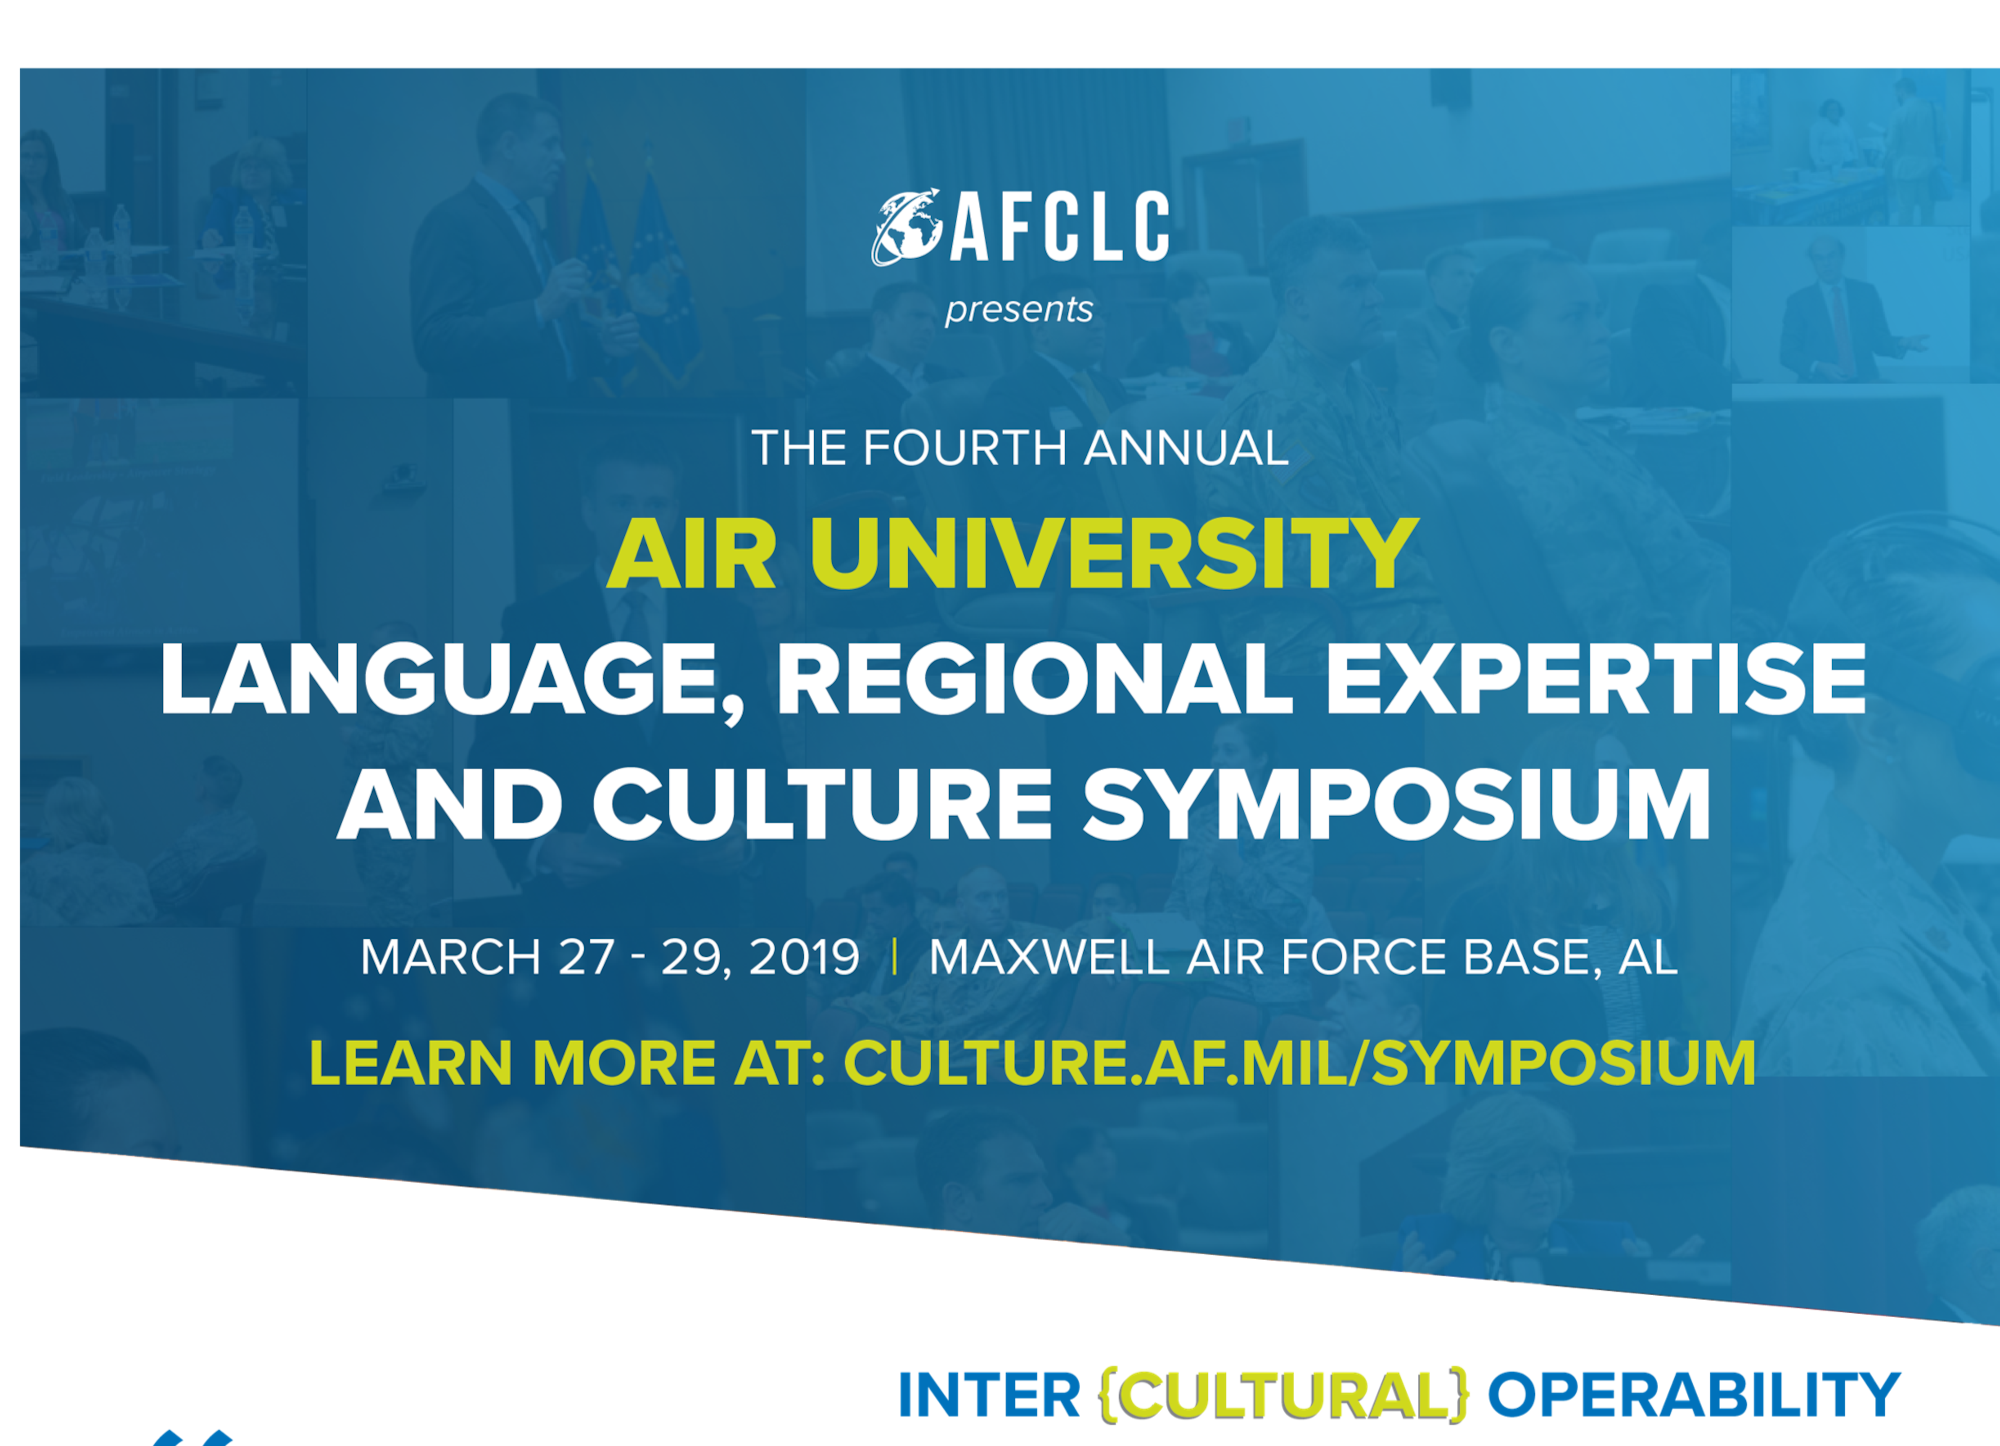 Registration open for Air University’s 4th LREC Symposium, seeking presenters